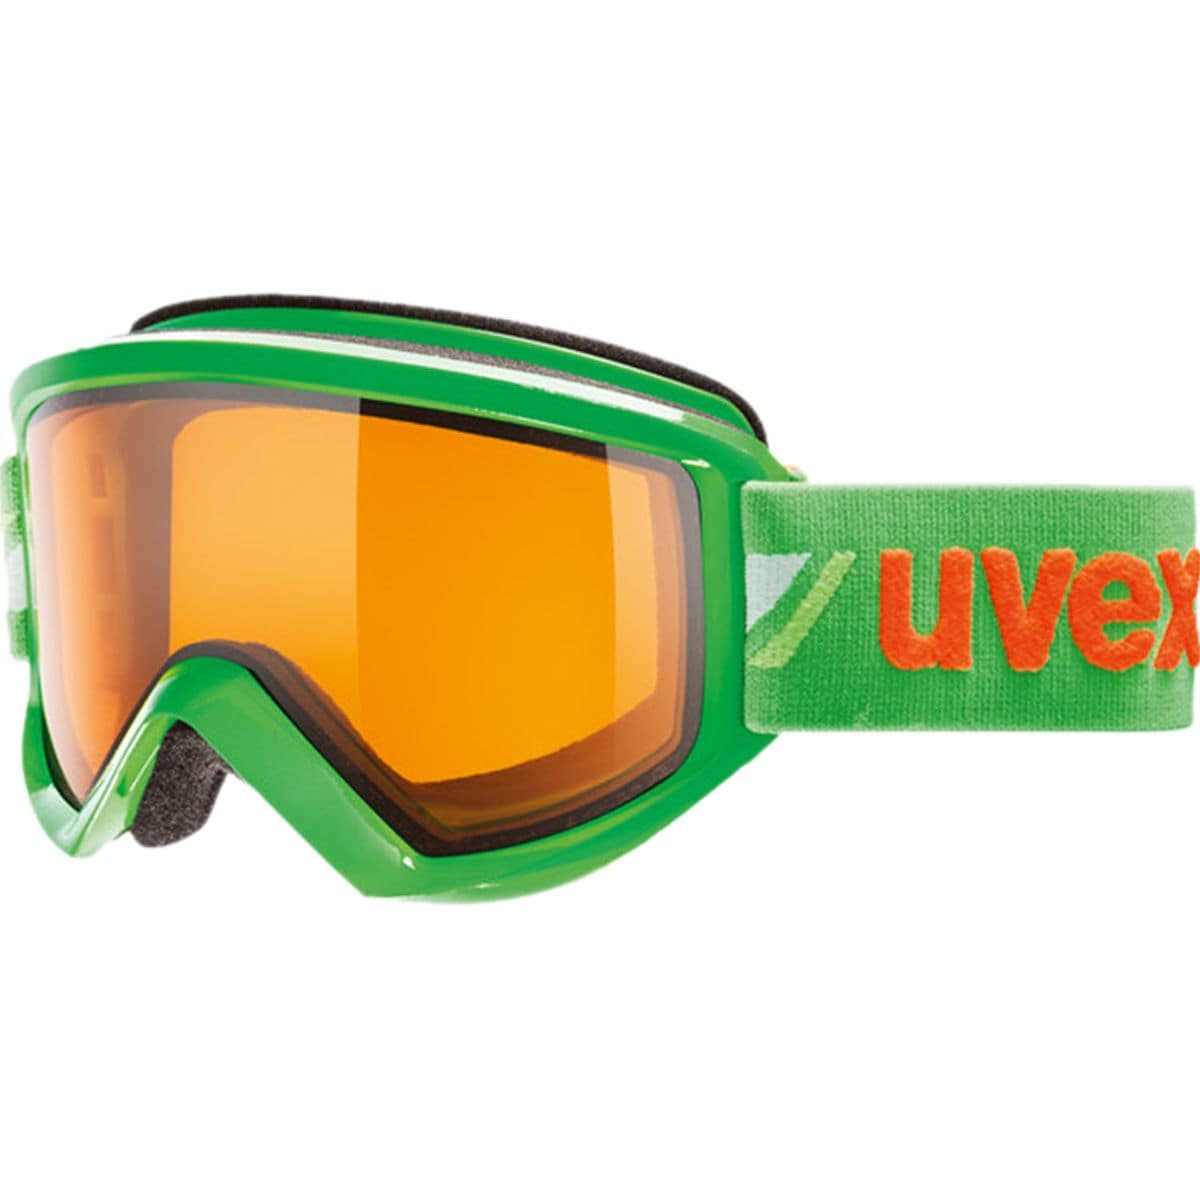 Uvex Fire Race Goggles - Men's - Ski